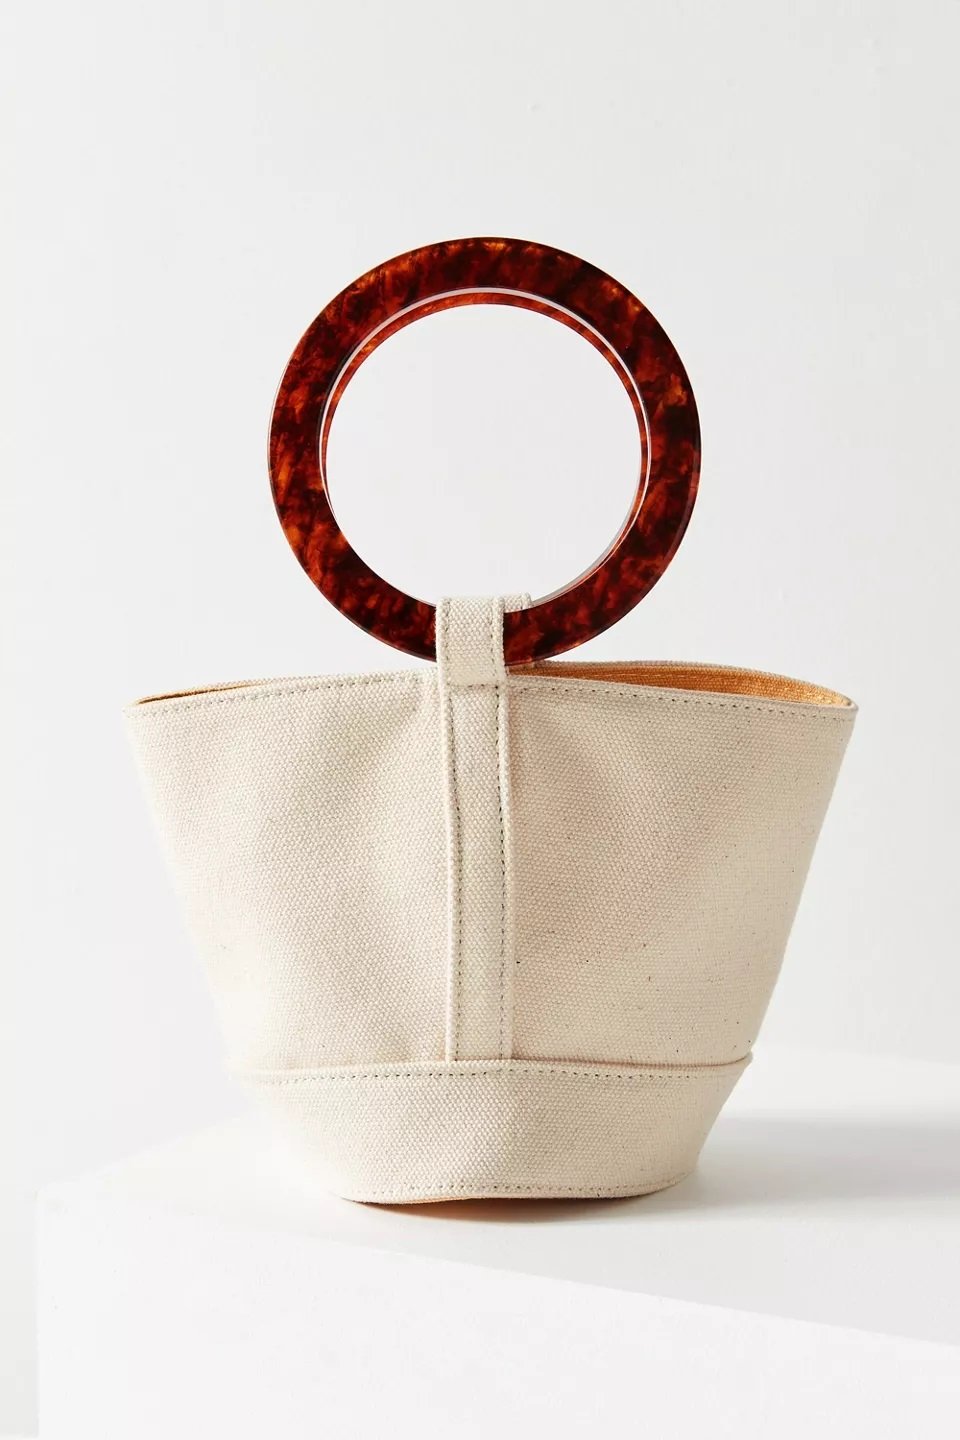 Urban Outfitters Catelyn Mini Bucket Bag.jpg